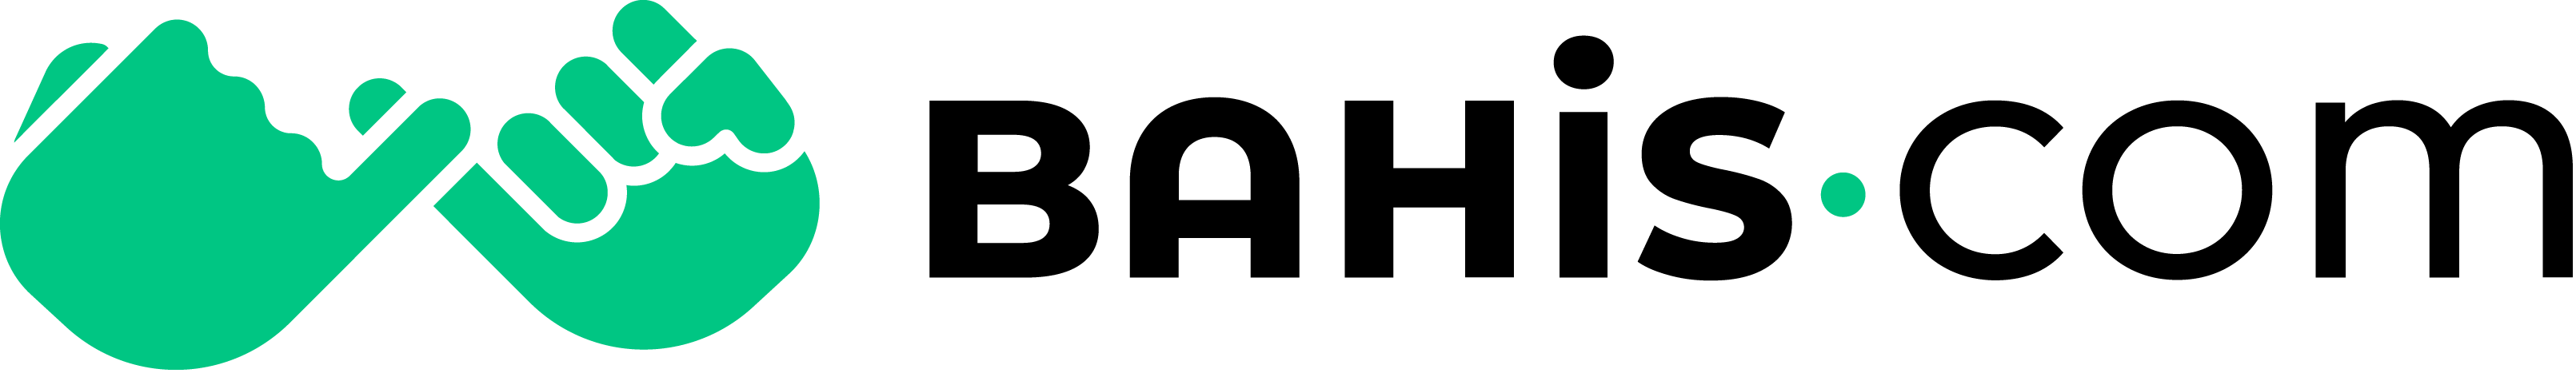 Bahiscom Logo